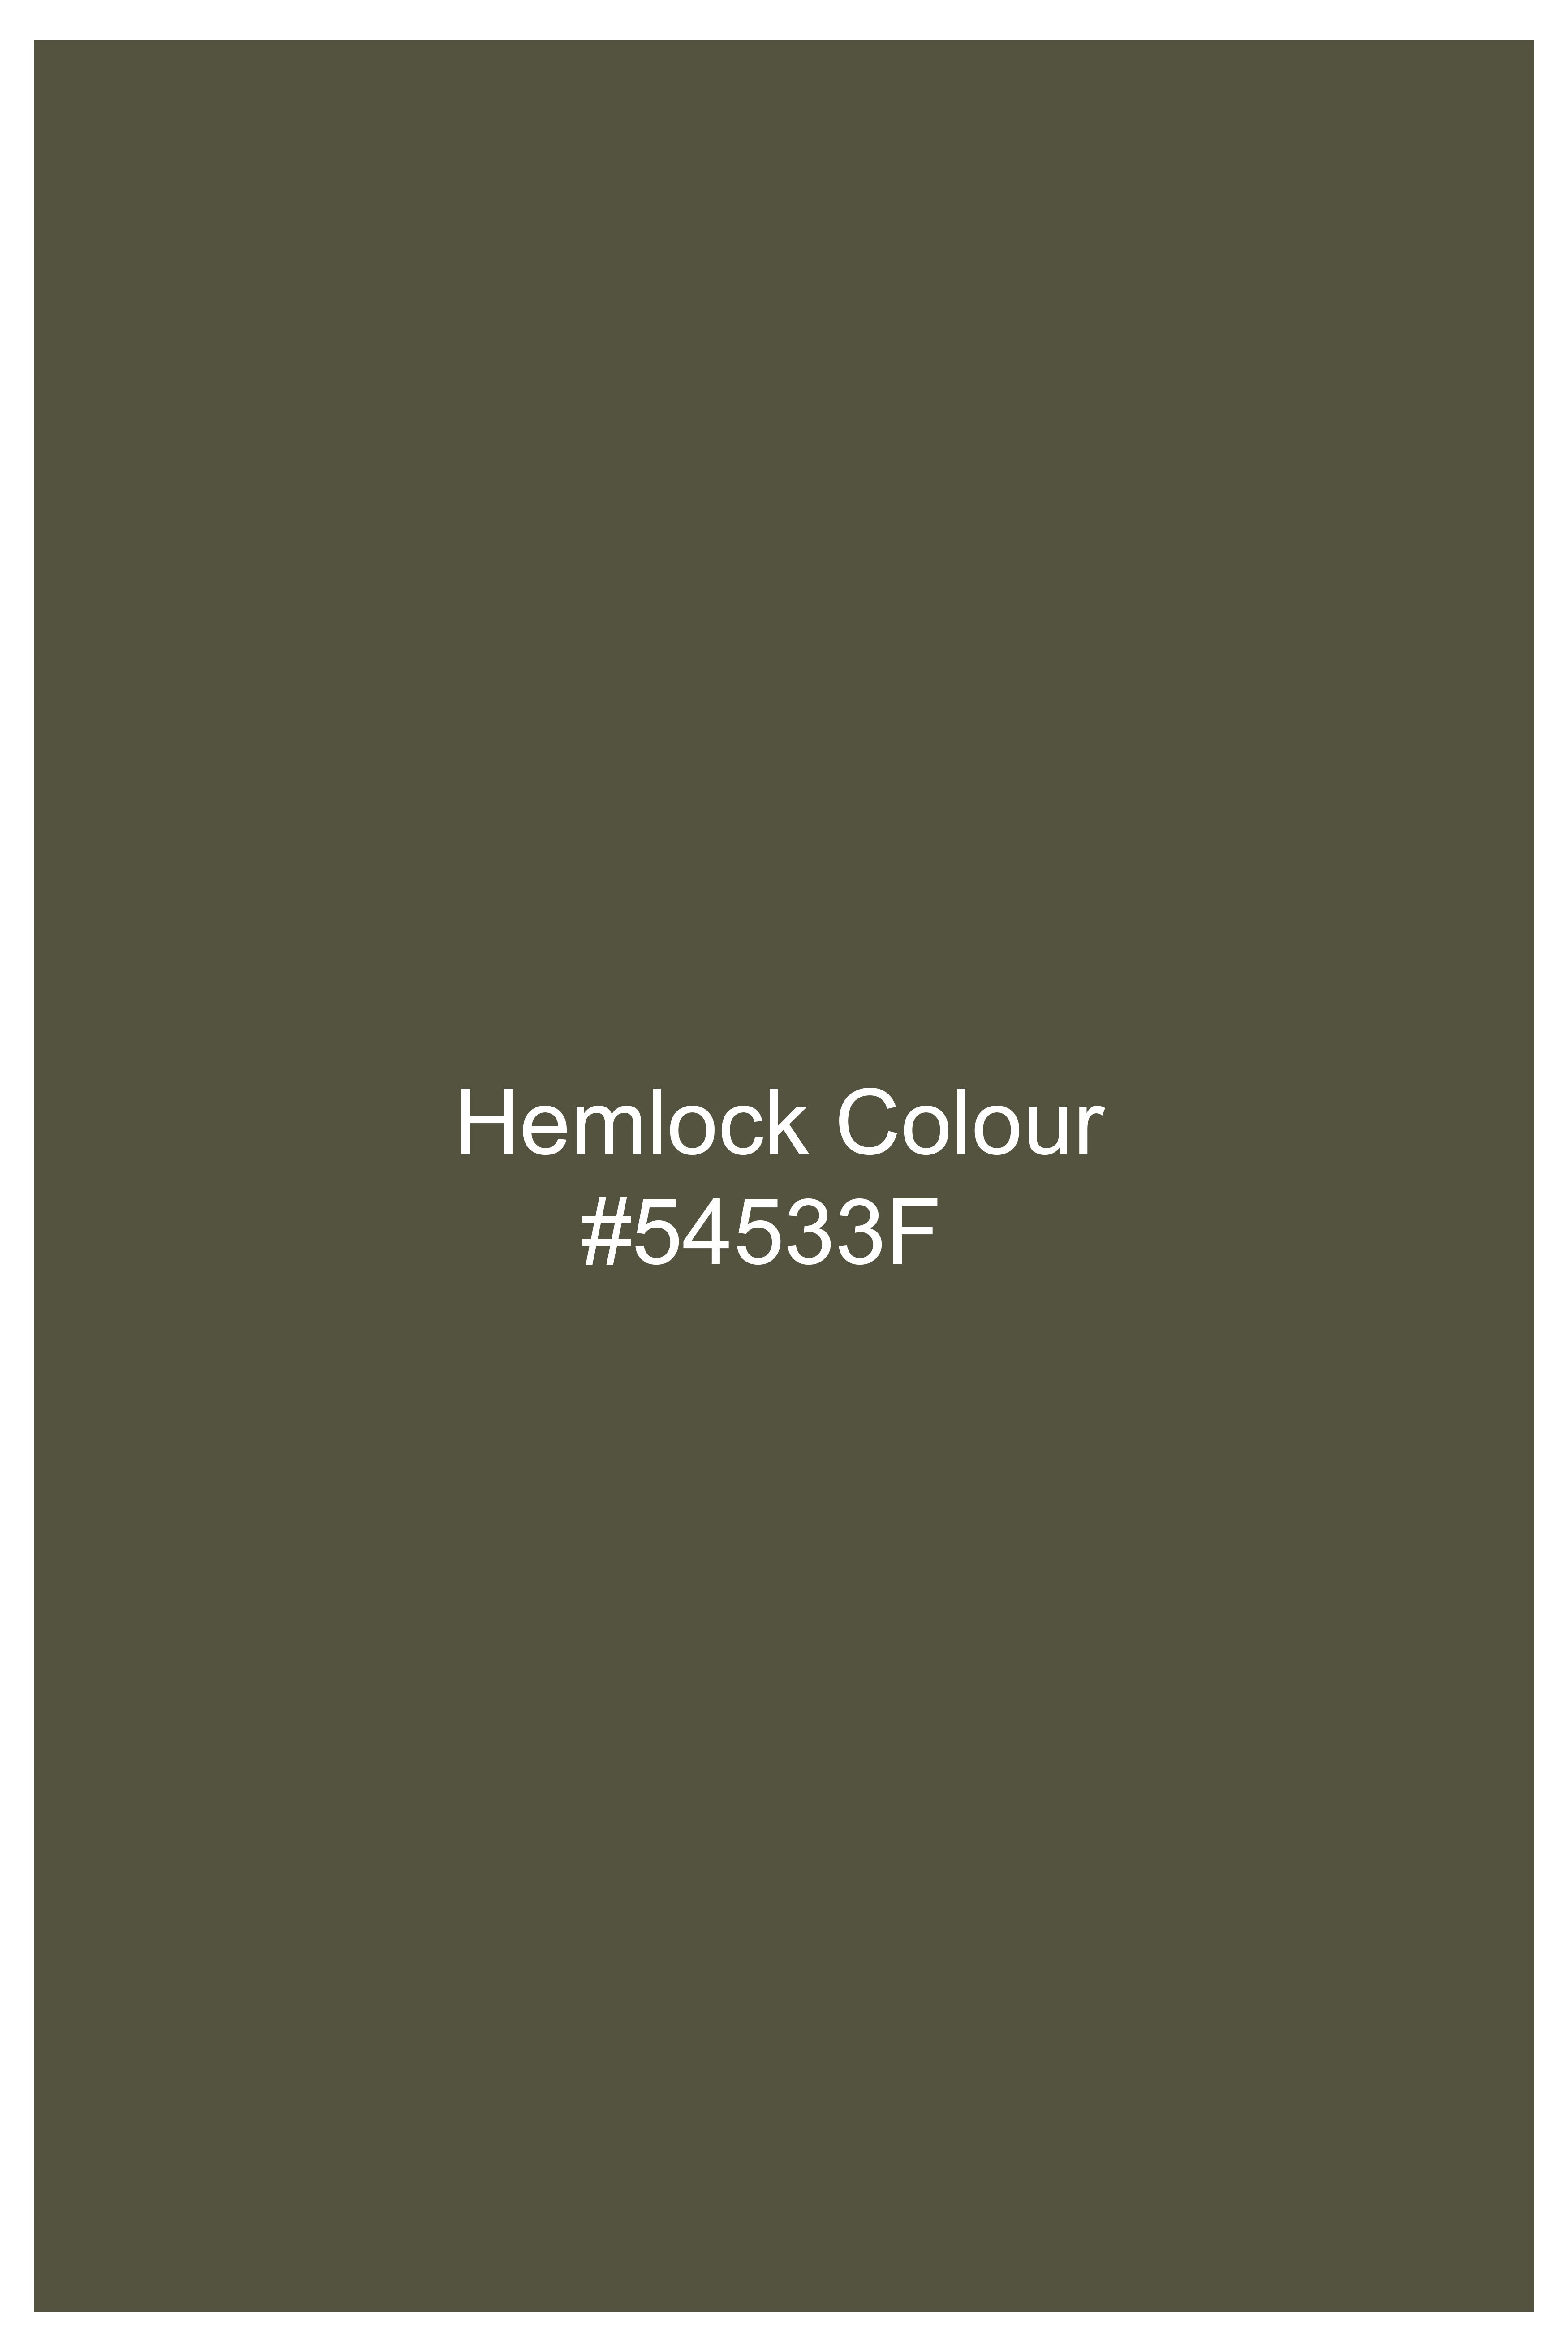 Hemlock Green Premium Cotton Stretchable Traveler Suit ST2784-SB-36,ST2784-SB-38,ST2784-SB-40,ST2784-SB-42,ST2784-SB-44,ST2784-SB-46,ST2784-SB-48,ST2784-SB-50,ST2784-SB-52,ST2784-SB-54,ST2784-SB-56,ST2784-SB-58,ST2784-SB-60